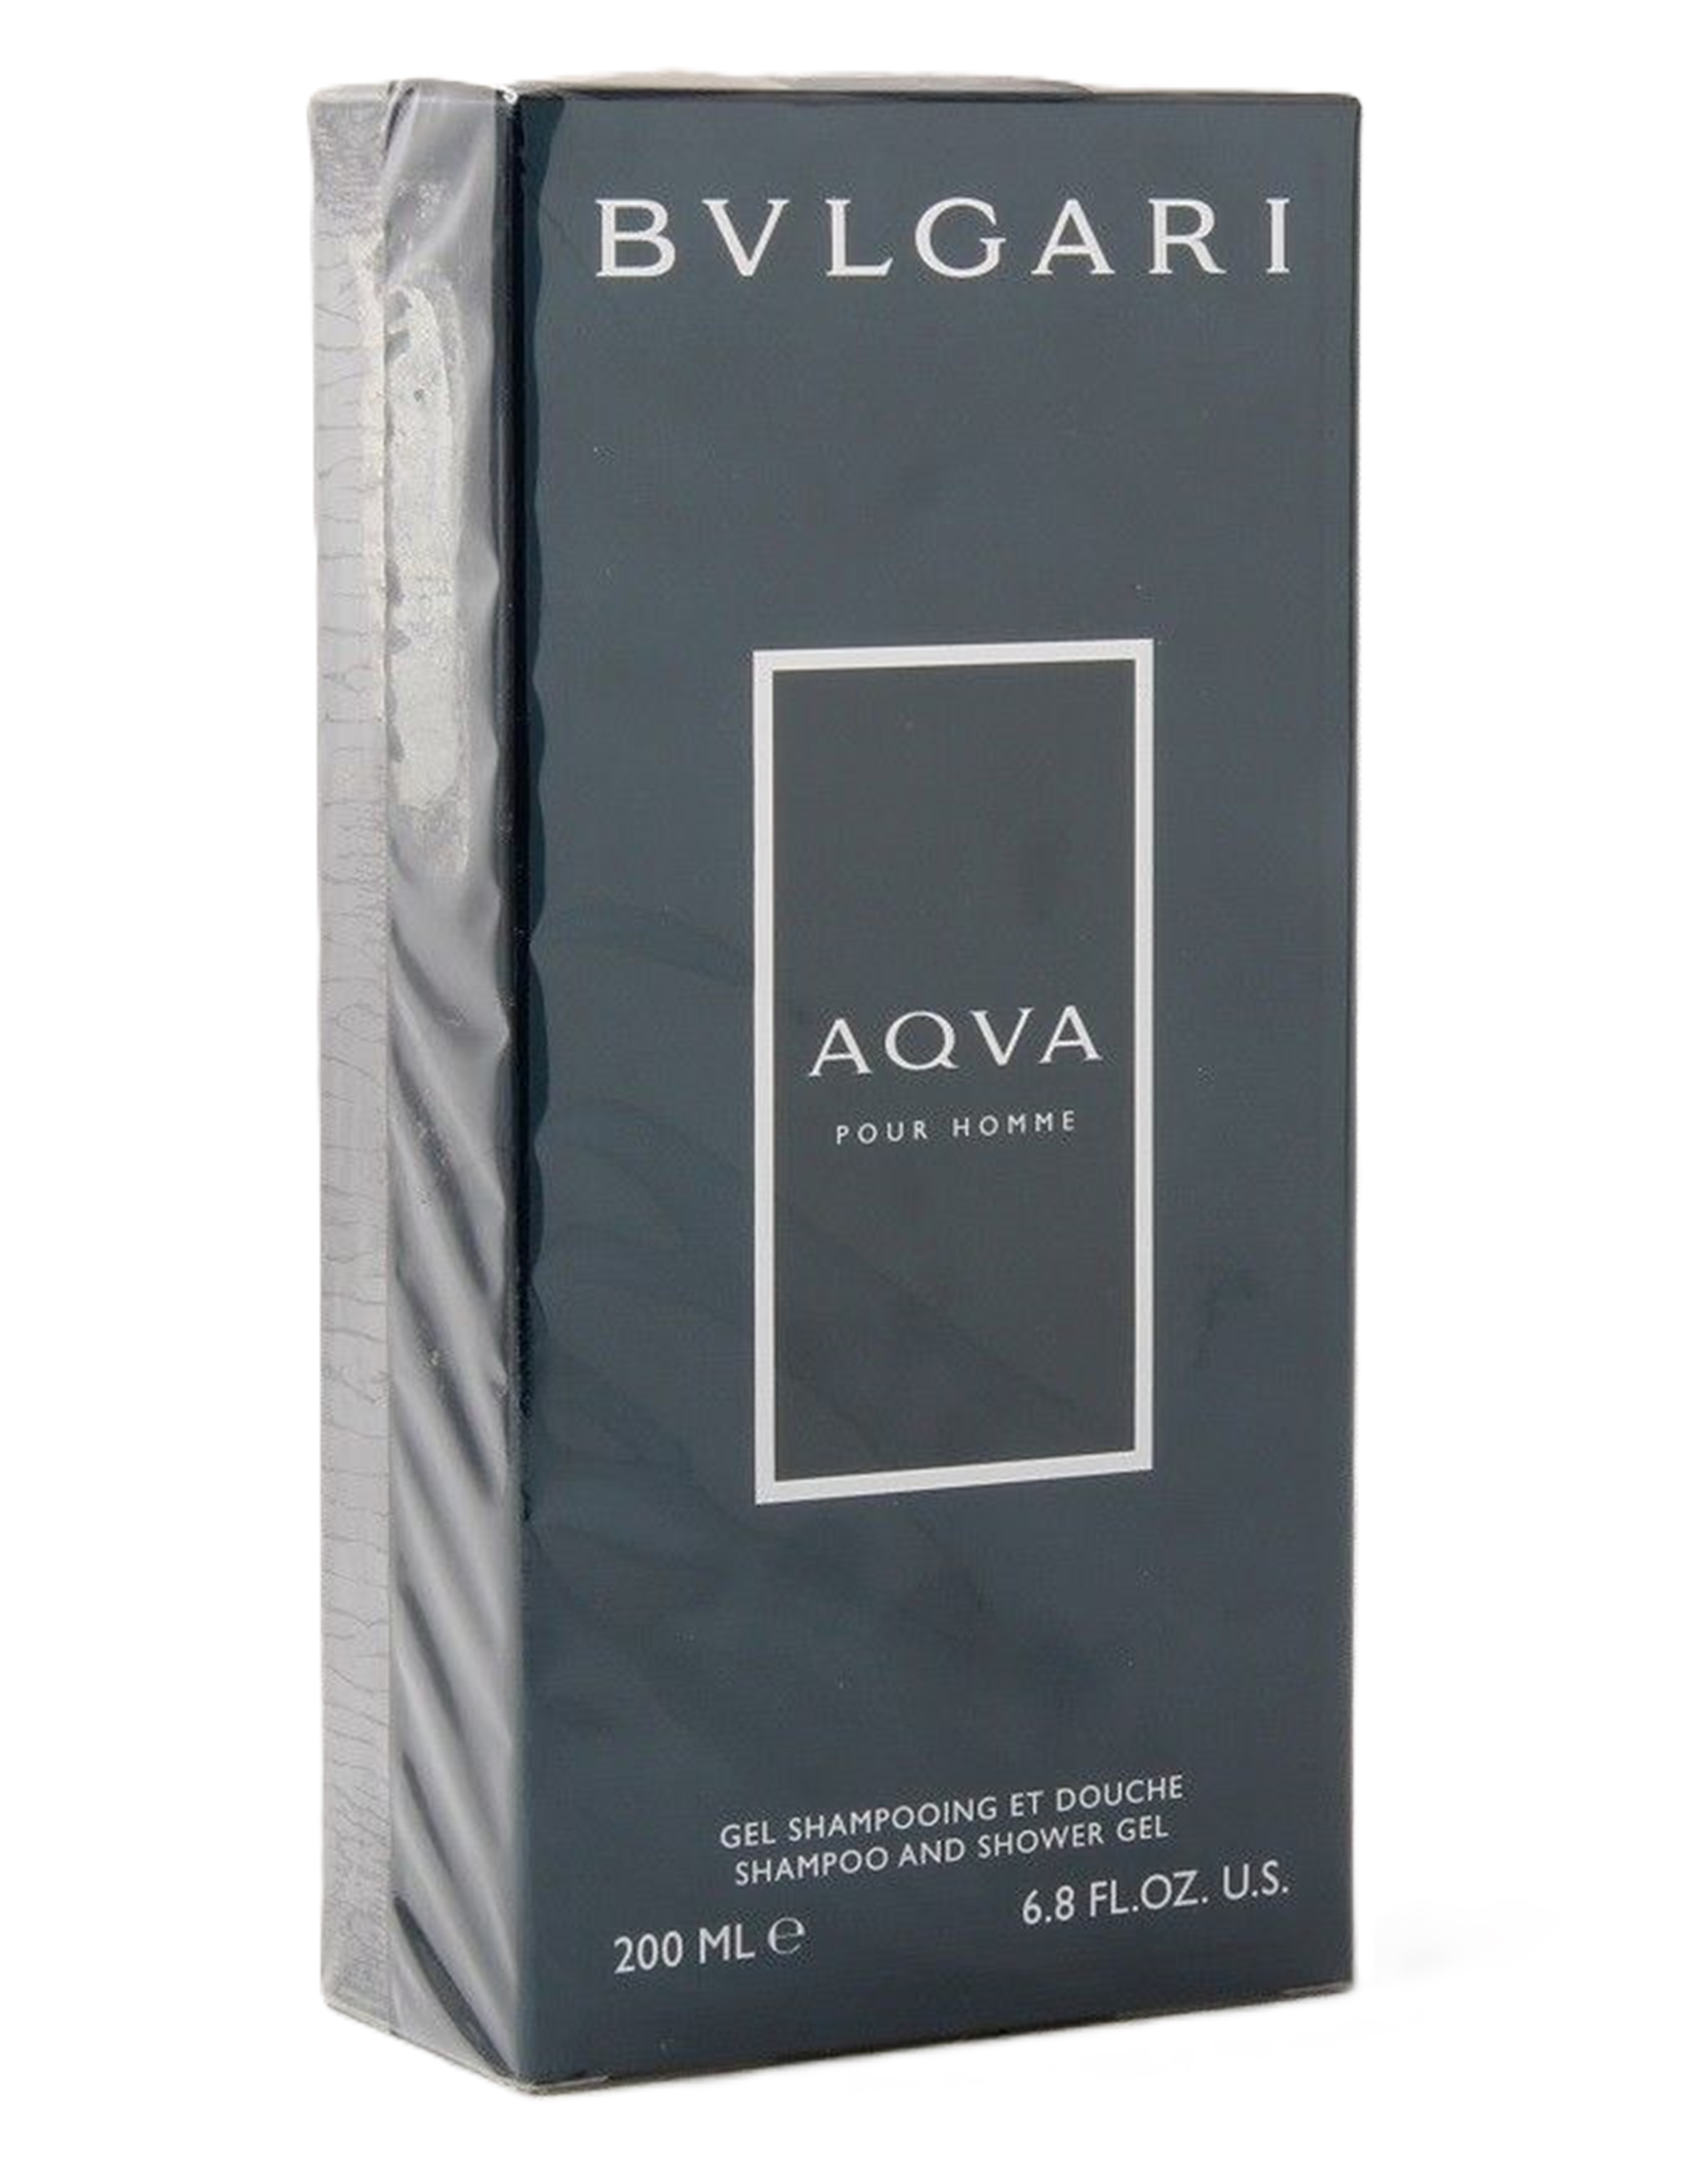 Bulgari Aqua Shampoo and Shower Gel Pour Homme 200ml